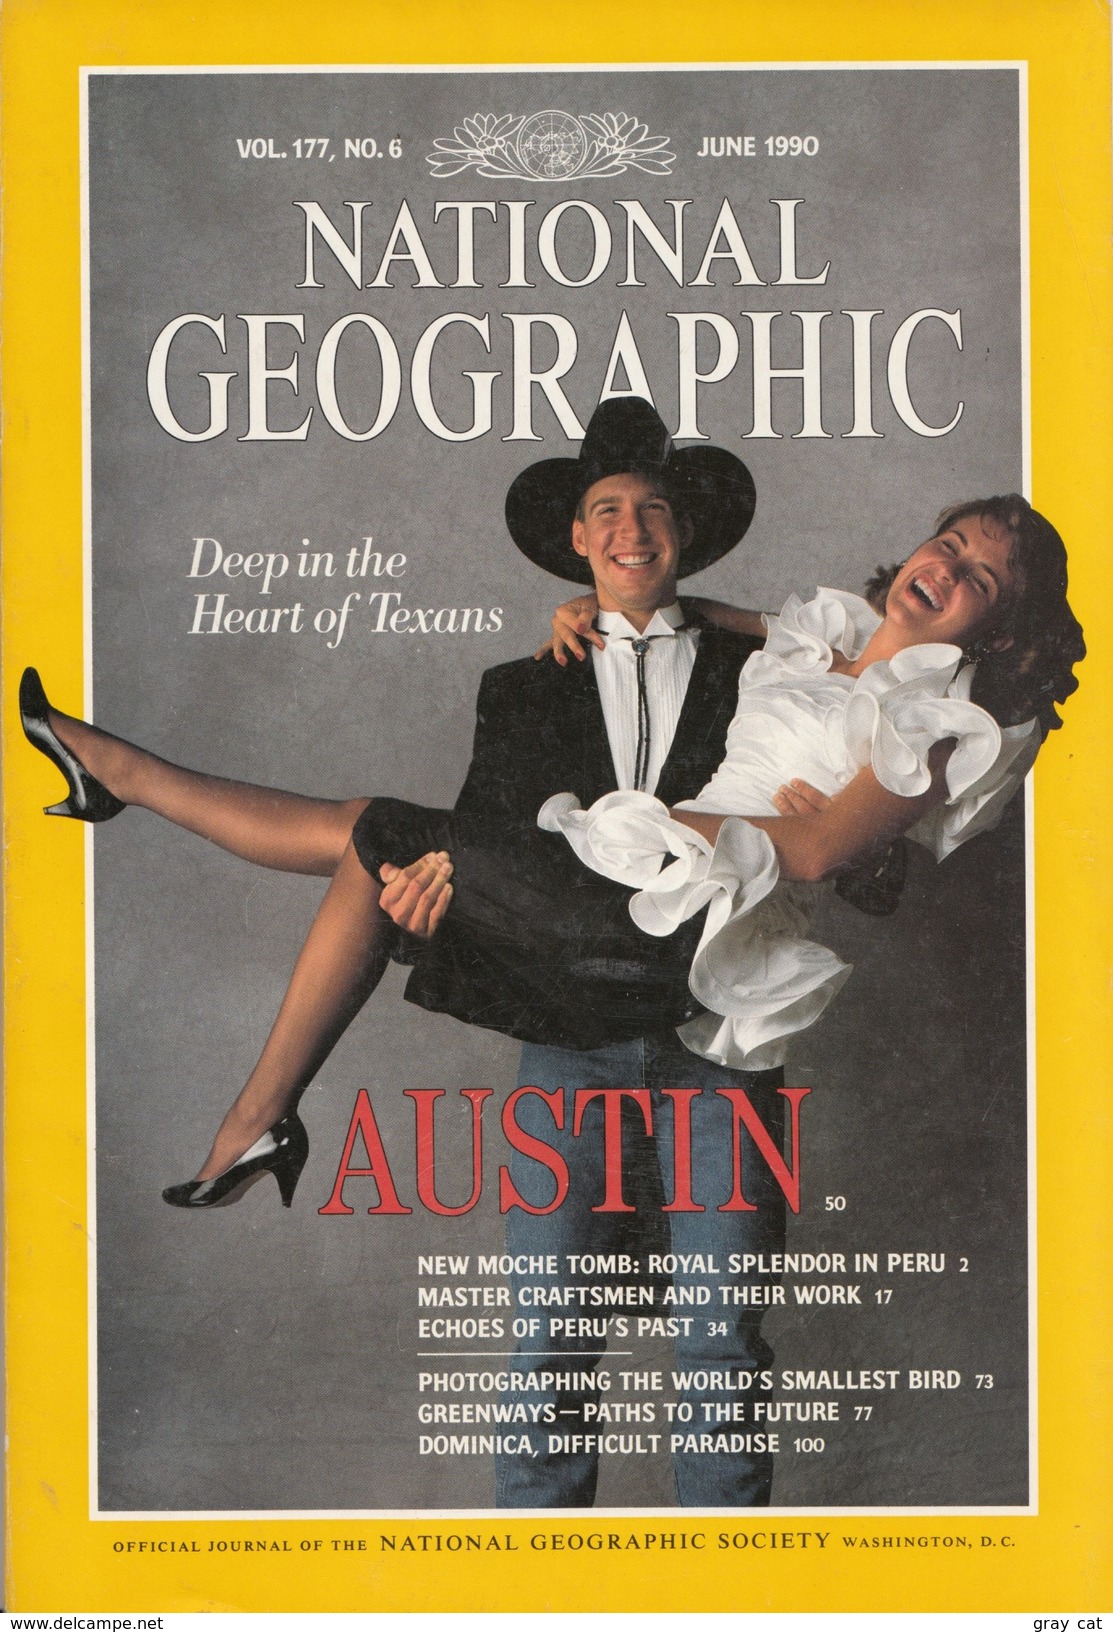 National Geographic Magazine Vol. 177, No. 6, June 1990 - Travel/ Exploration